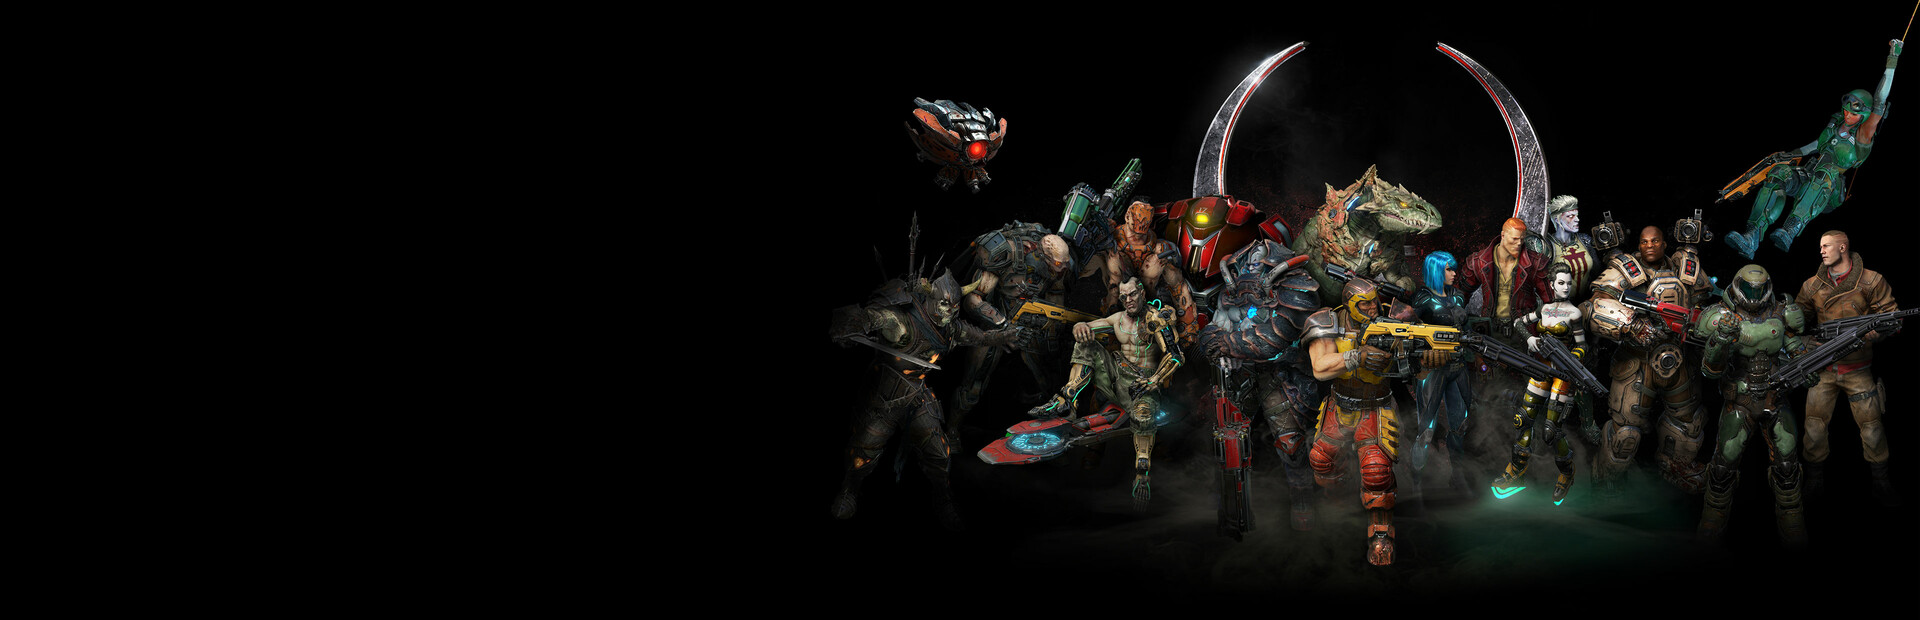 Quake Champions cover image